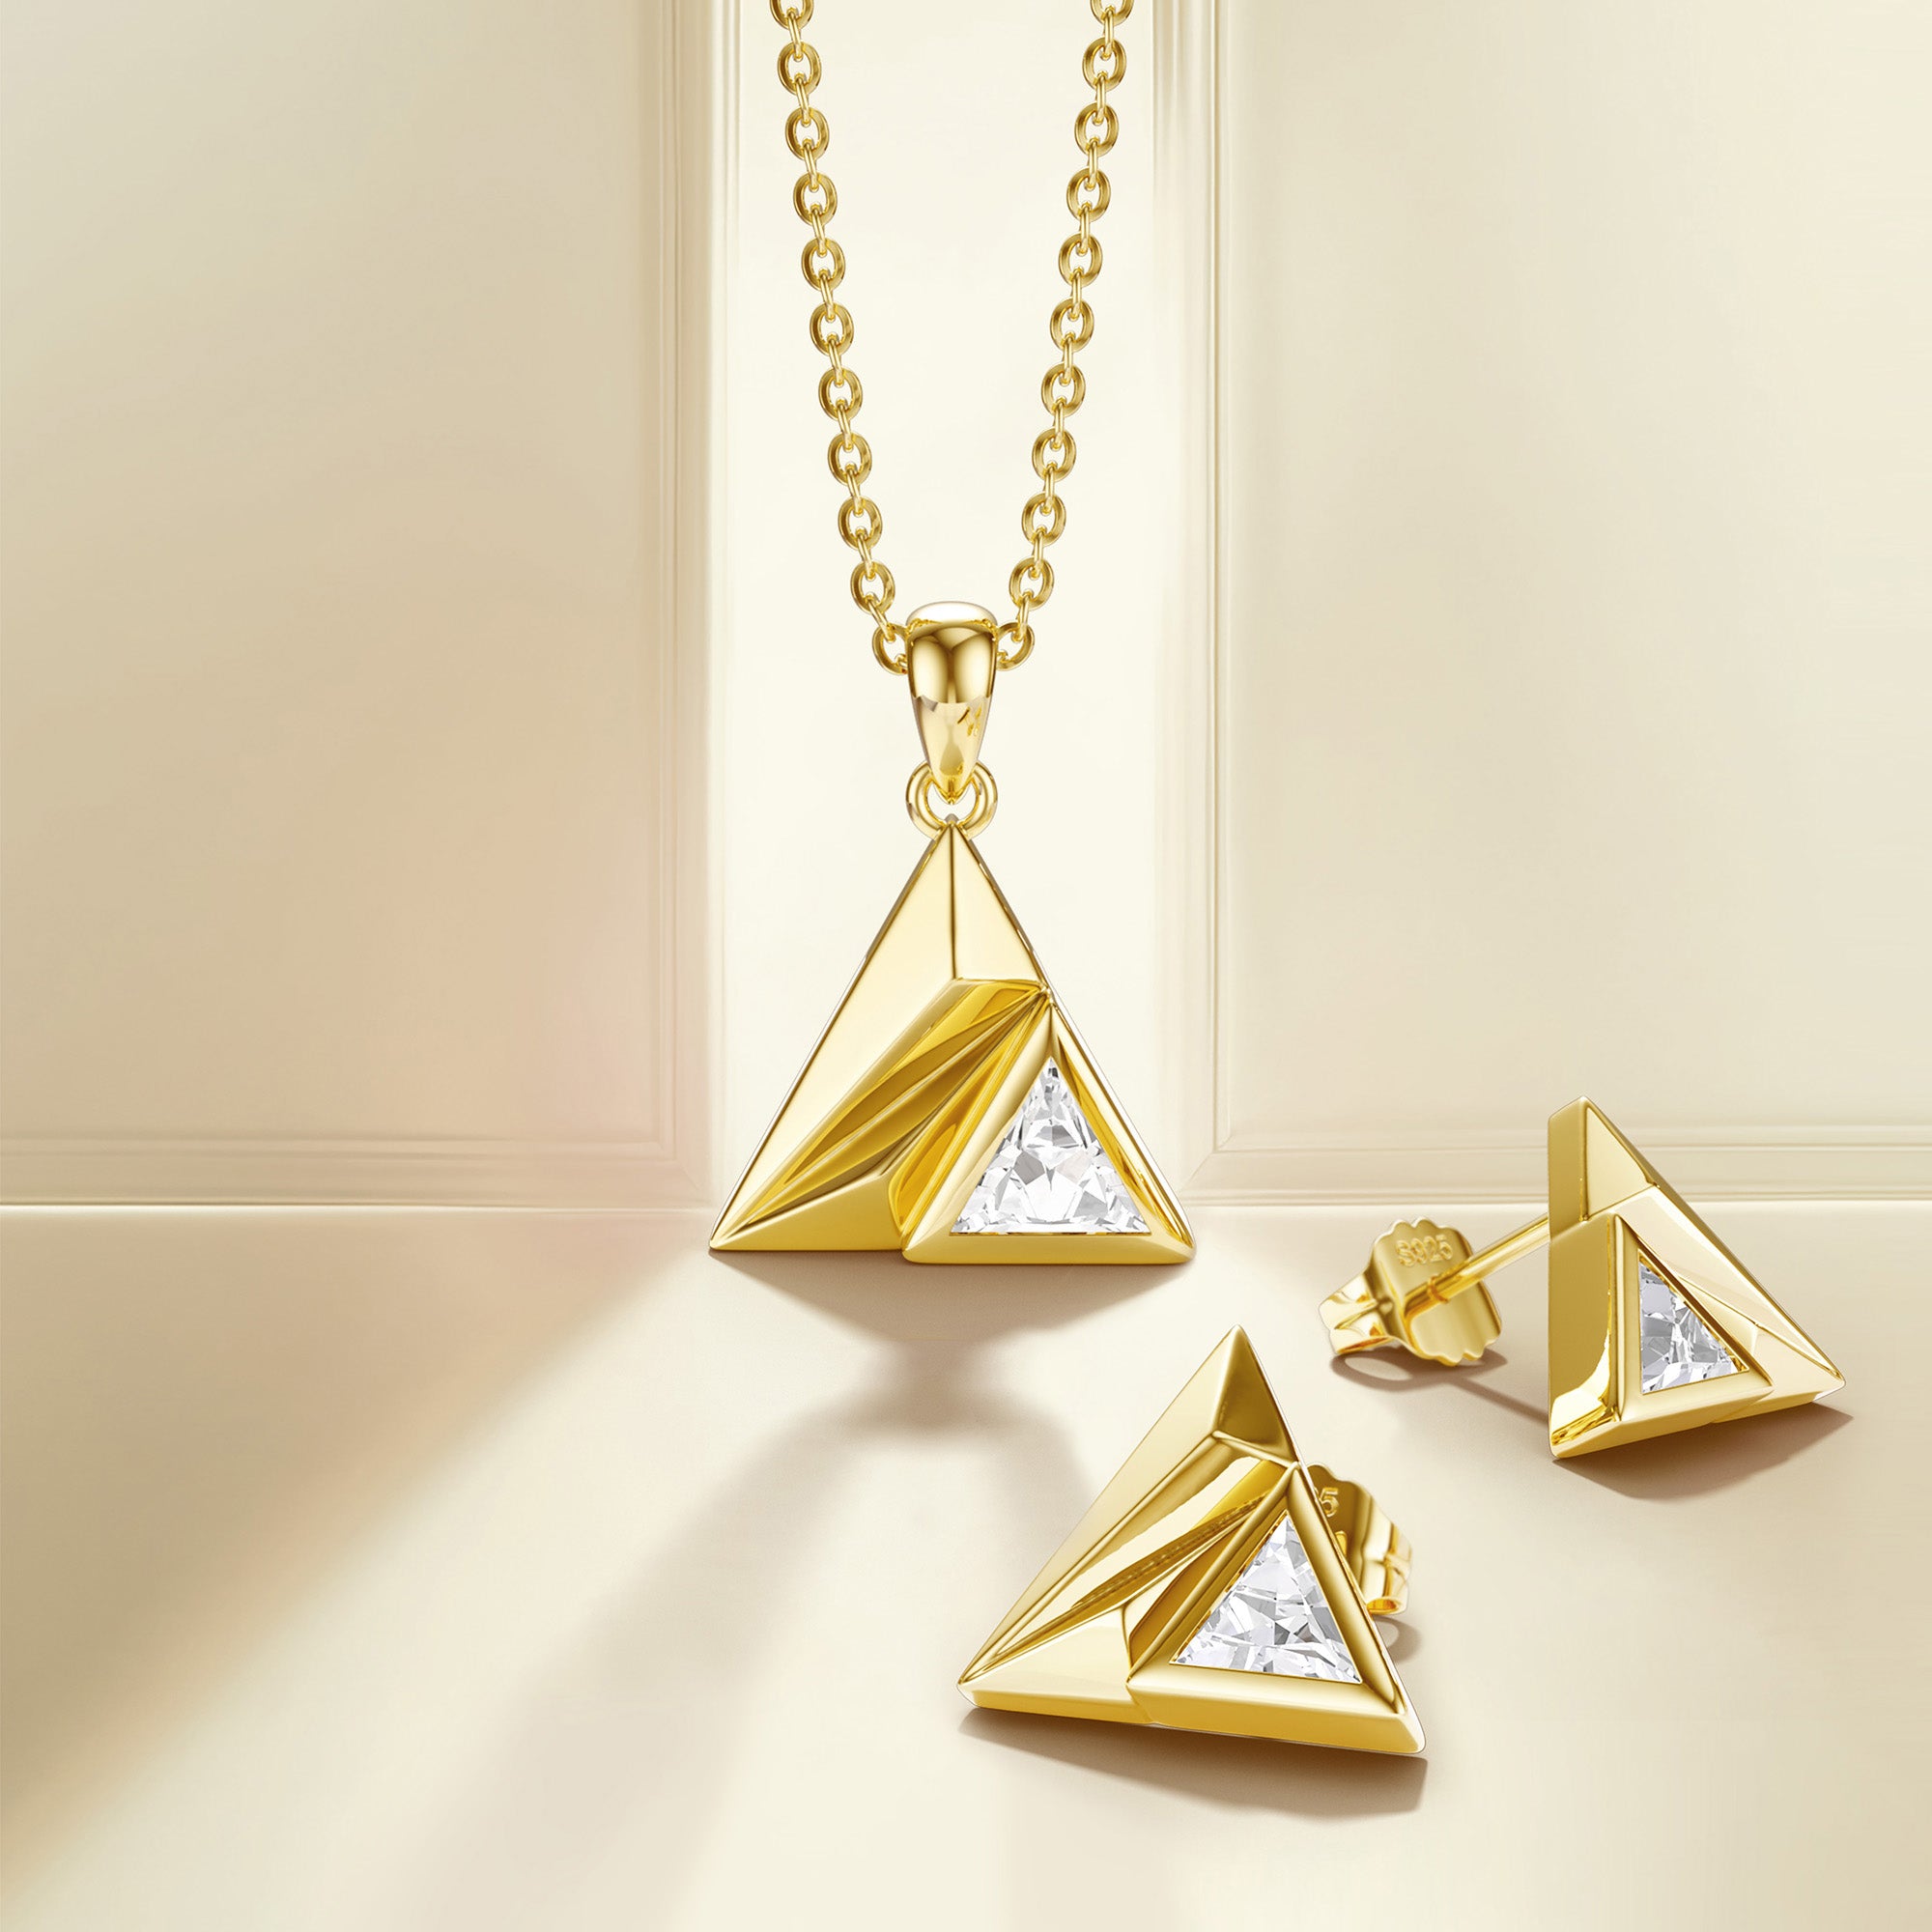 Triangle Pyramid Trillion Cut Pendant Necklace - vanimy